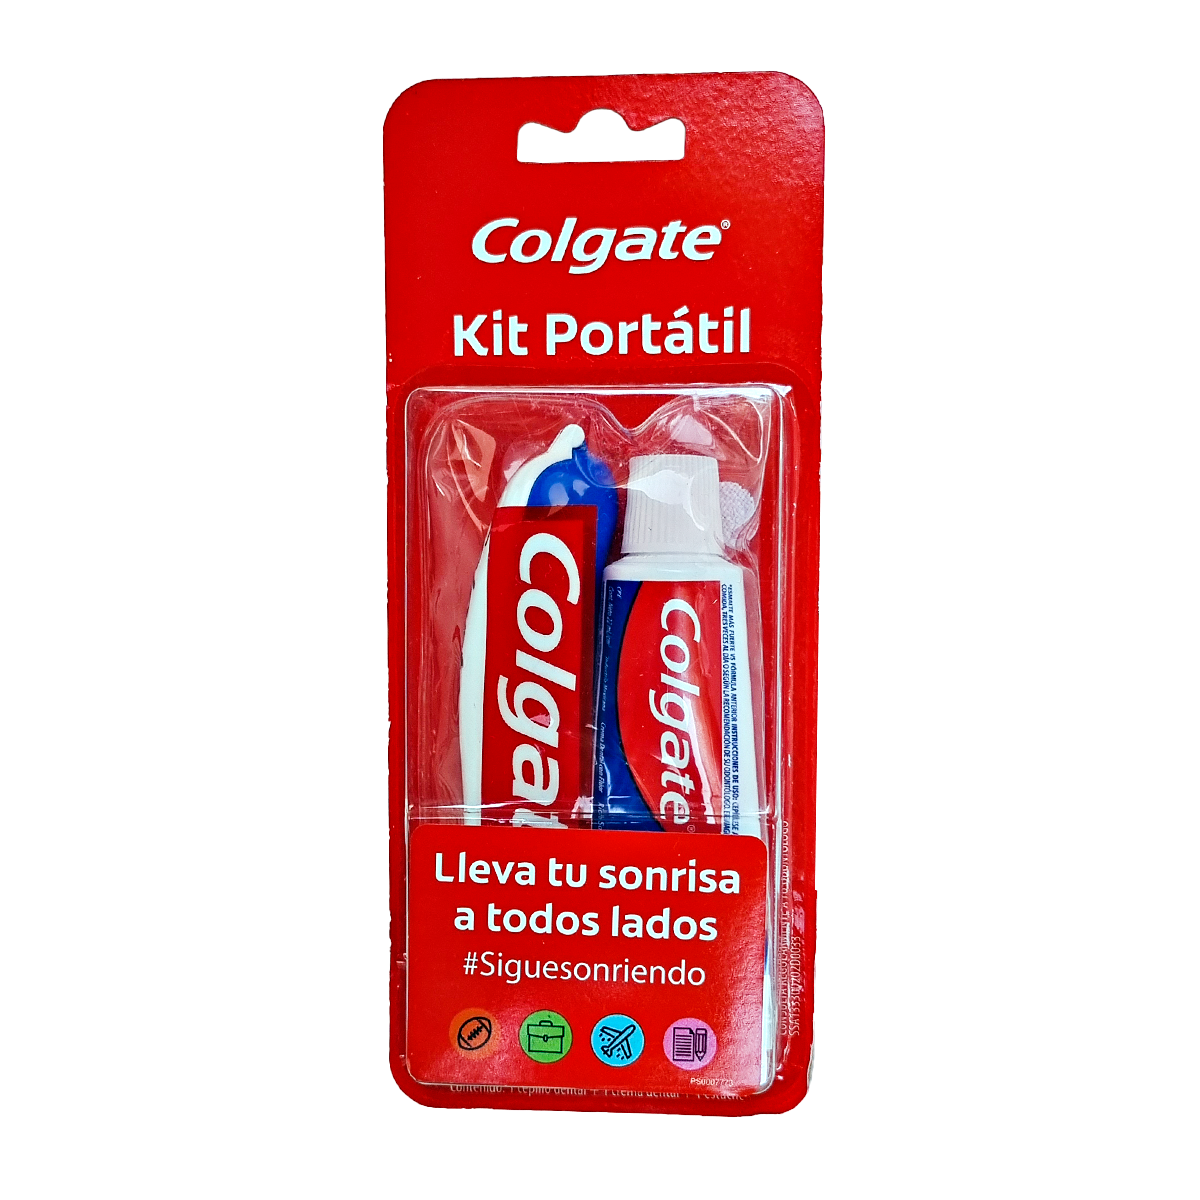 Kit Portátil Colgate Cepillo + Pasta Dental Paquete